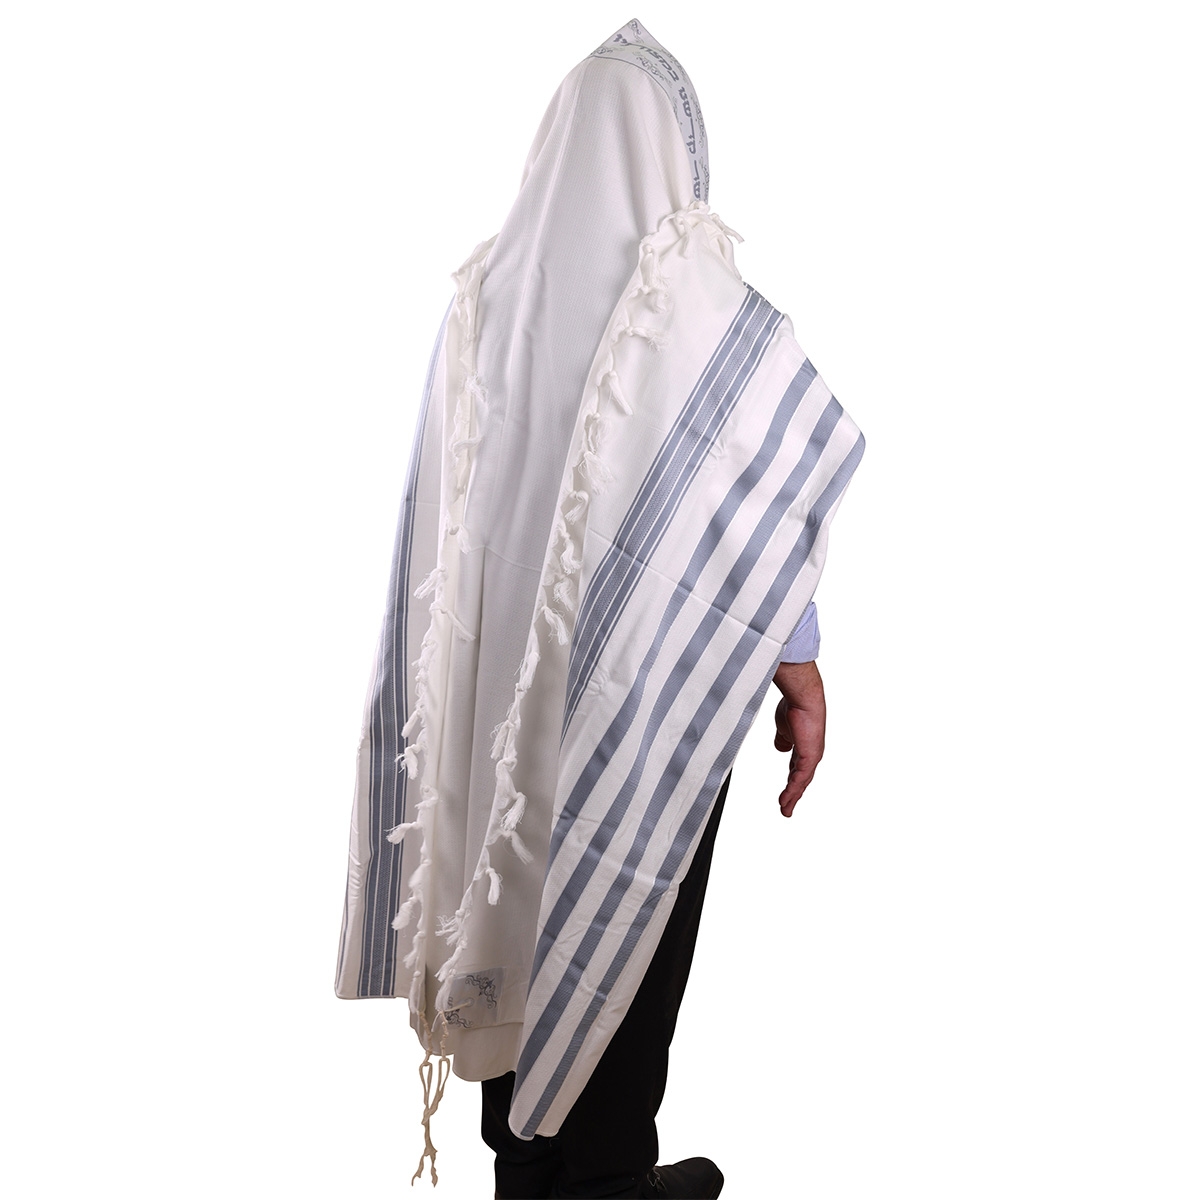 100% Cotton Prayer Shawl with Gray Stripes - 1